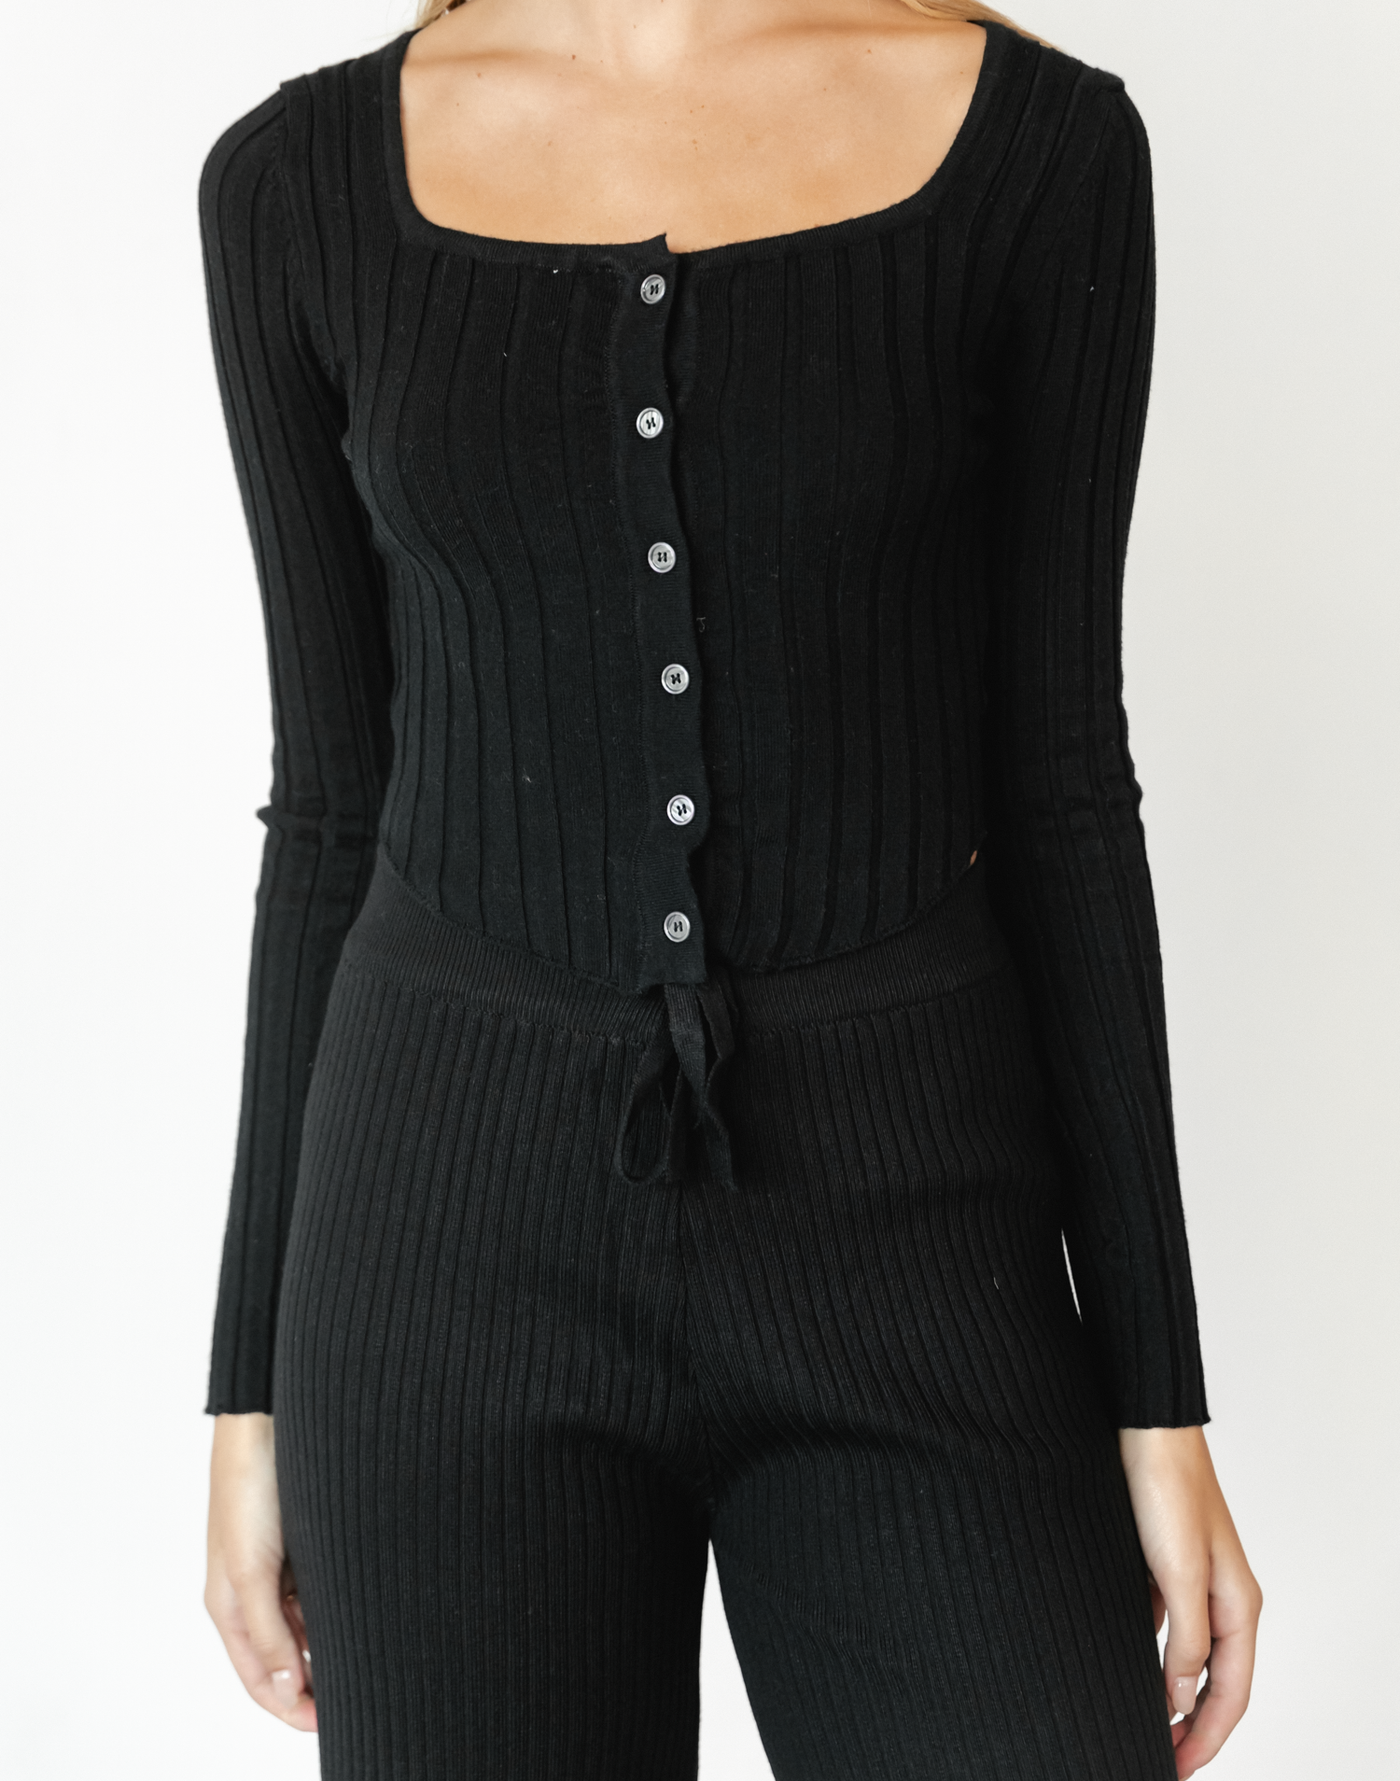 Mapel Long Sleeve Top (Black) - Black Long Sleeve Top - Women's Top - Charcoal Clothing